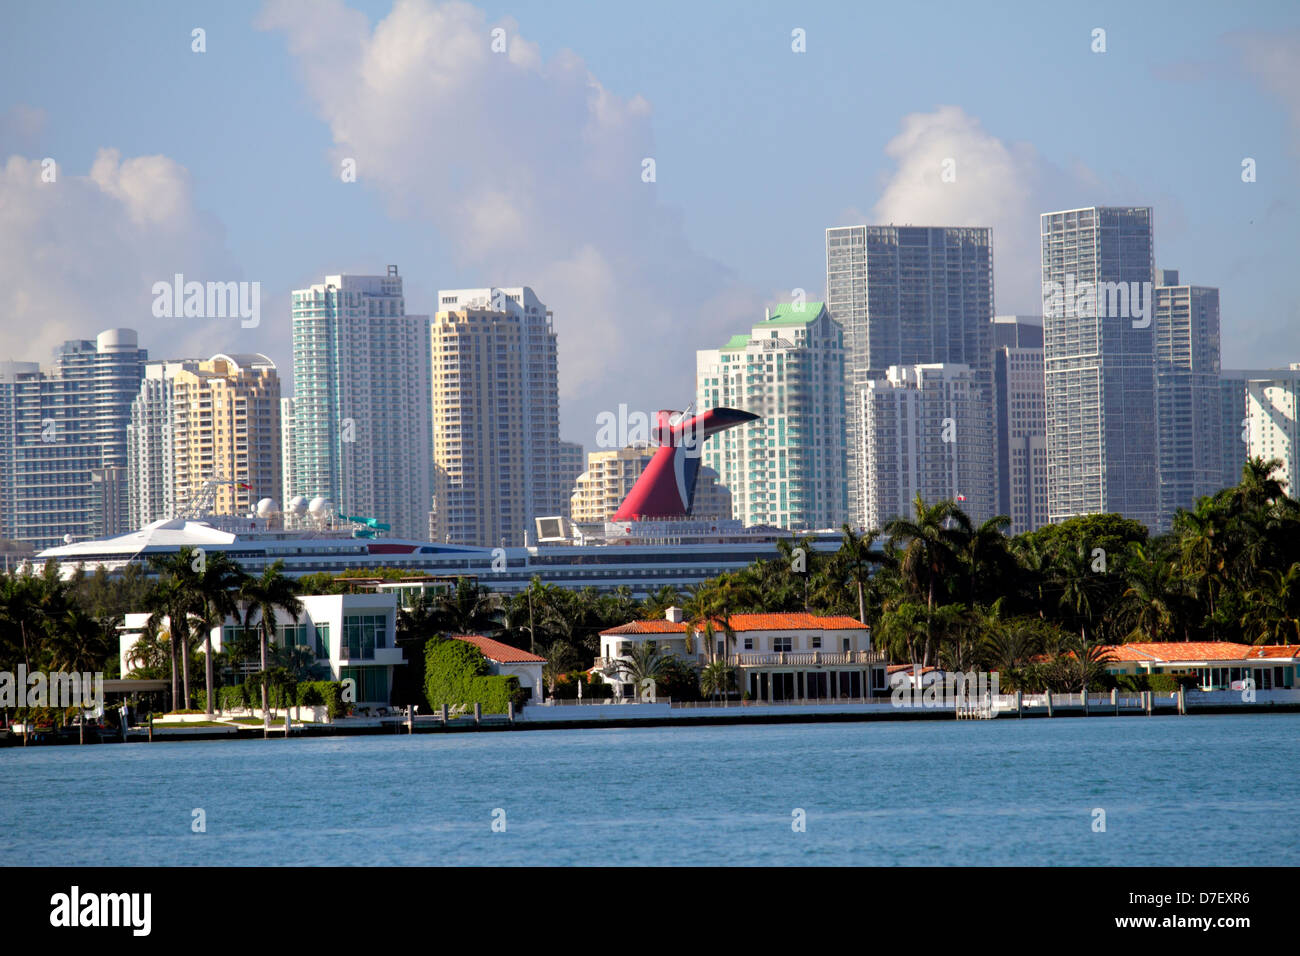 Miami Beach Florida,Biscayne Bay,city,skyline,skyscrapers,buildings,city skyline,water,Star Island,cruise ship,Carnival Cruise Lines,high rise skyscra Stock Photo